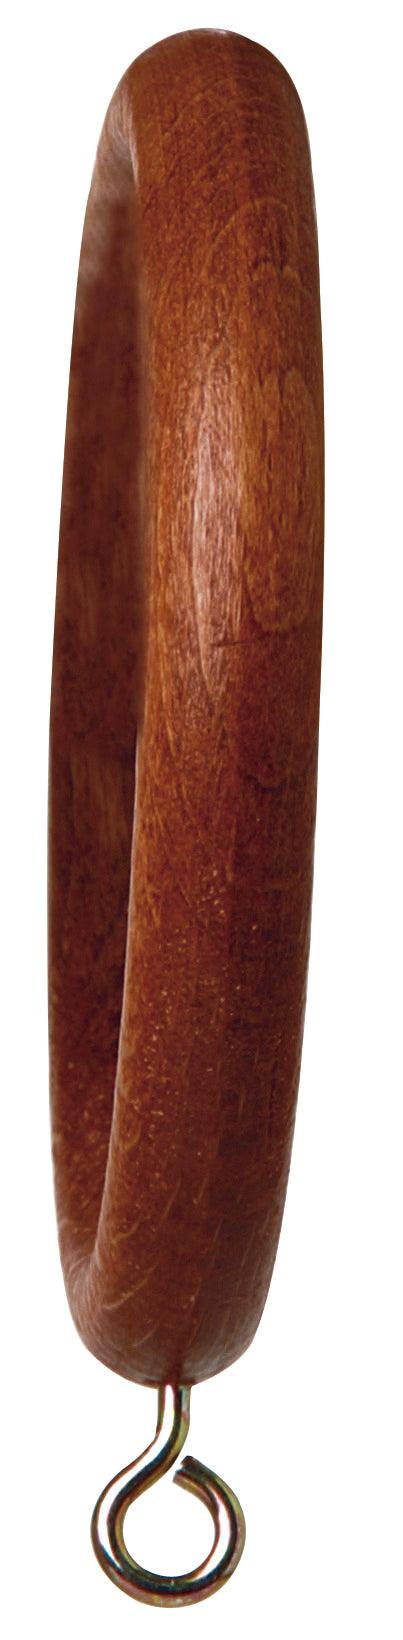 Ring Wood w/eye U 1-3/16" - Alan Richard Textiles, LTD Zabala 1-3/16" 2000 Wood & Maderas Wood